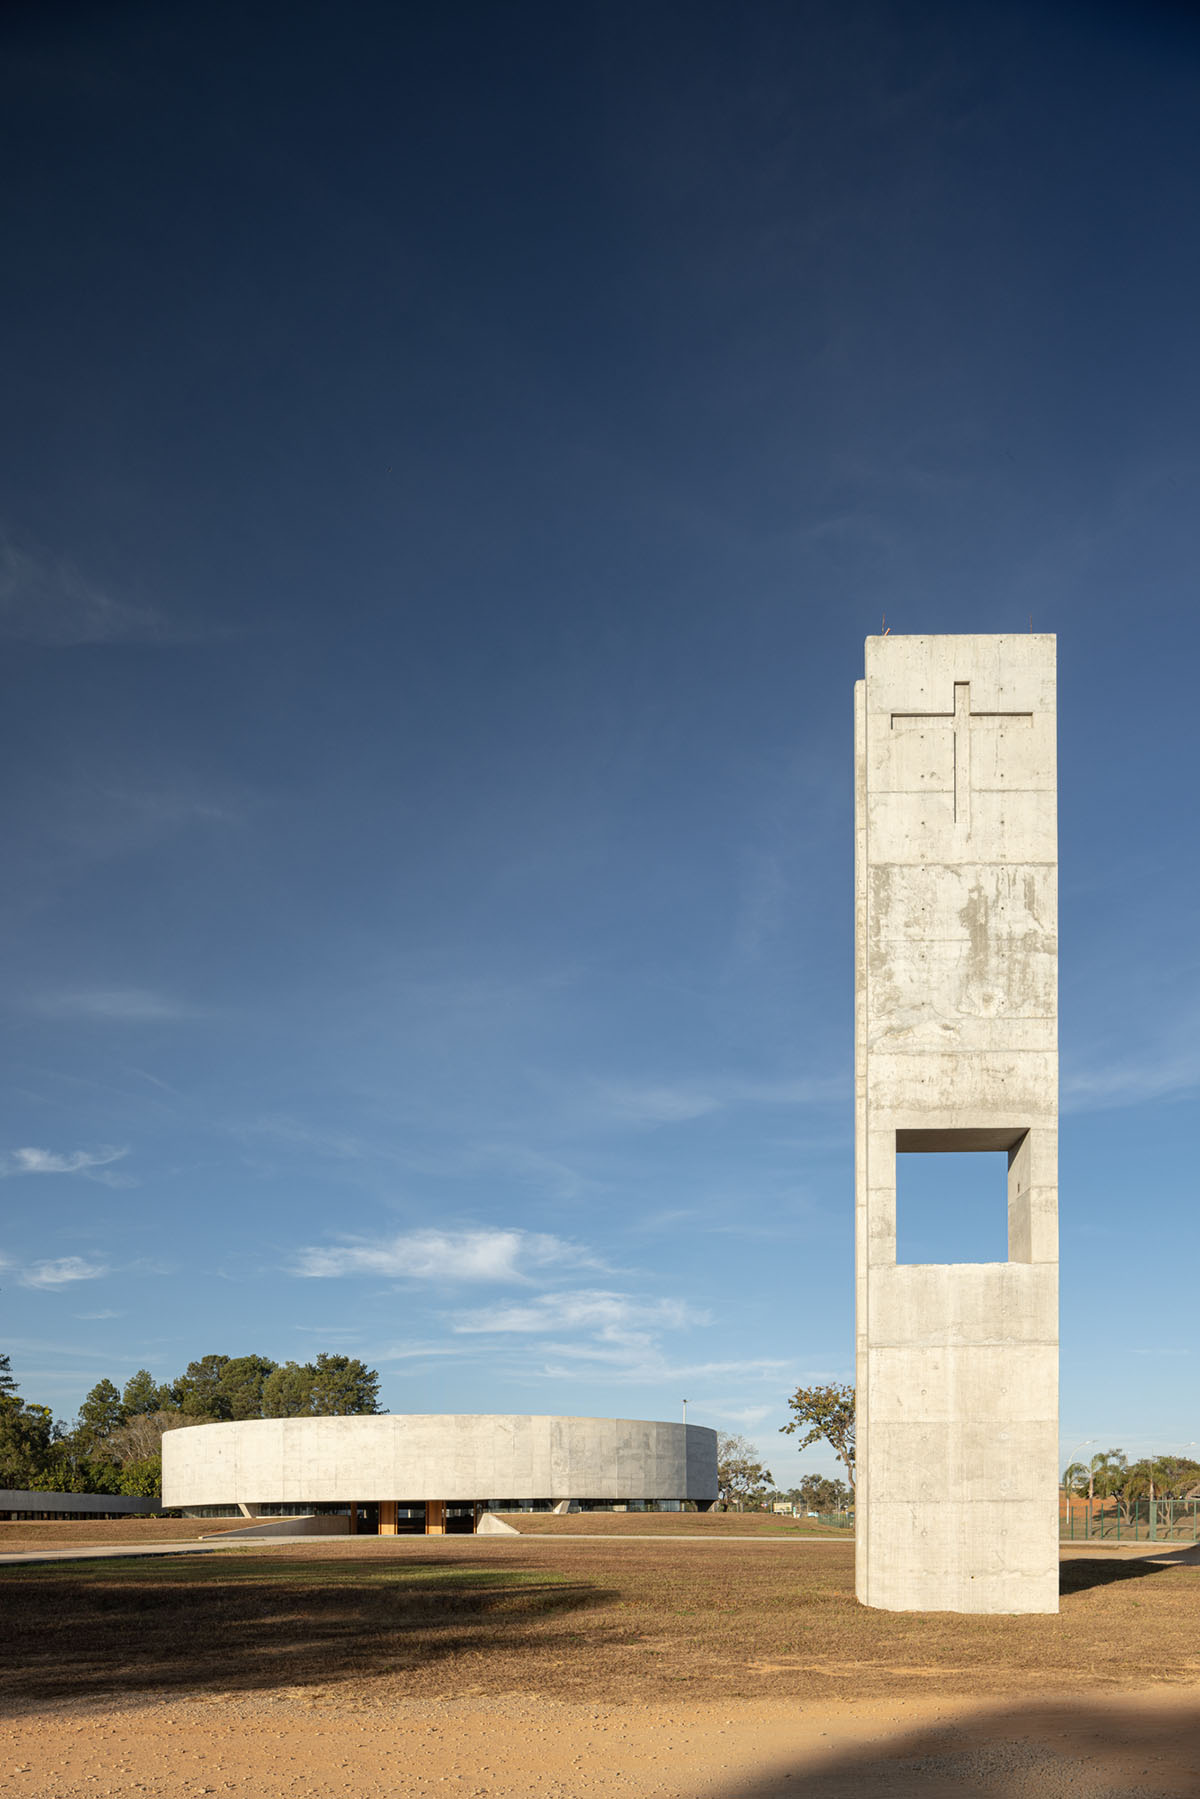 ARQBR Arquitetura e Urbanismo built concrete church complementing the Brazilian landscape 